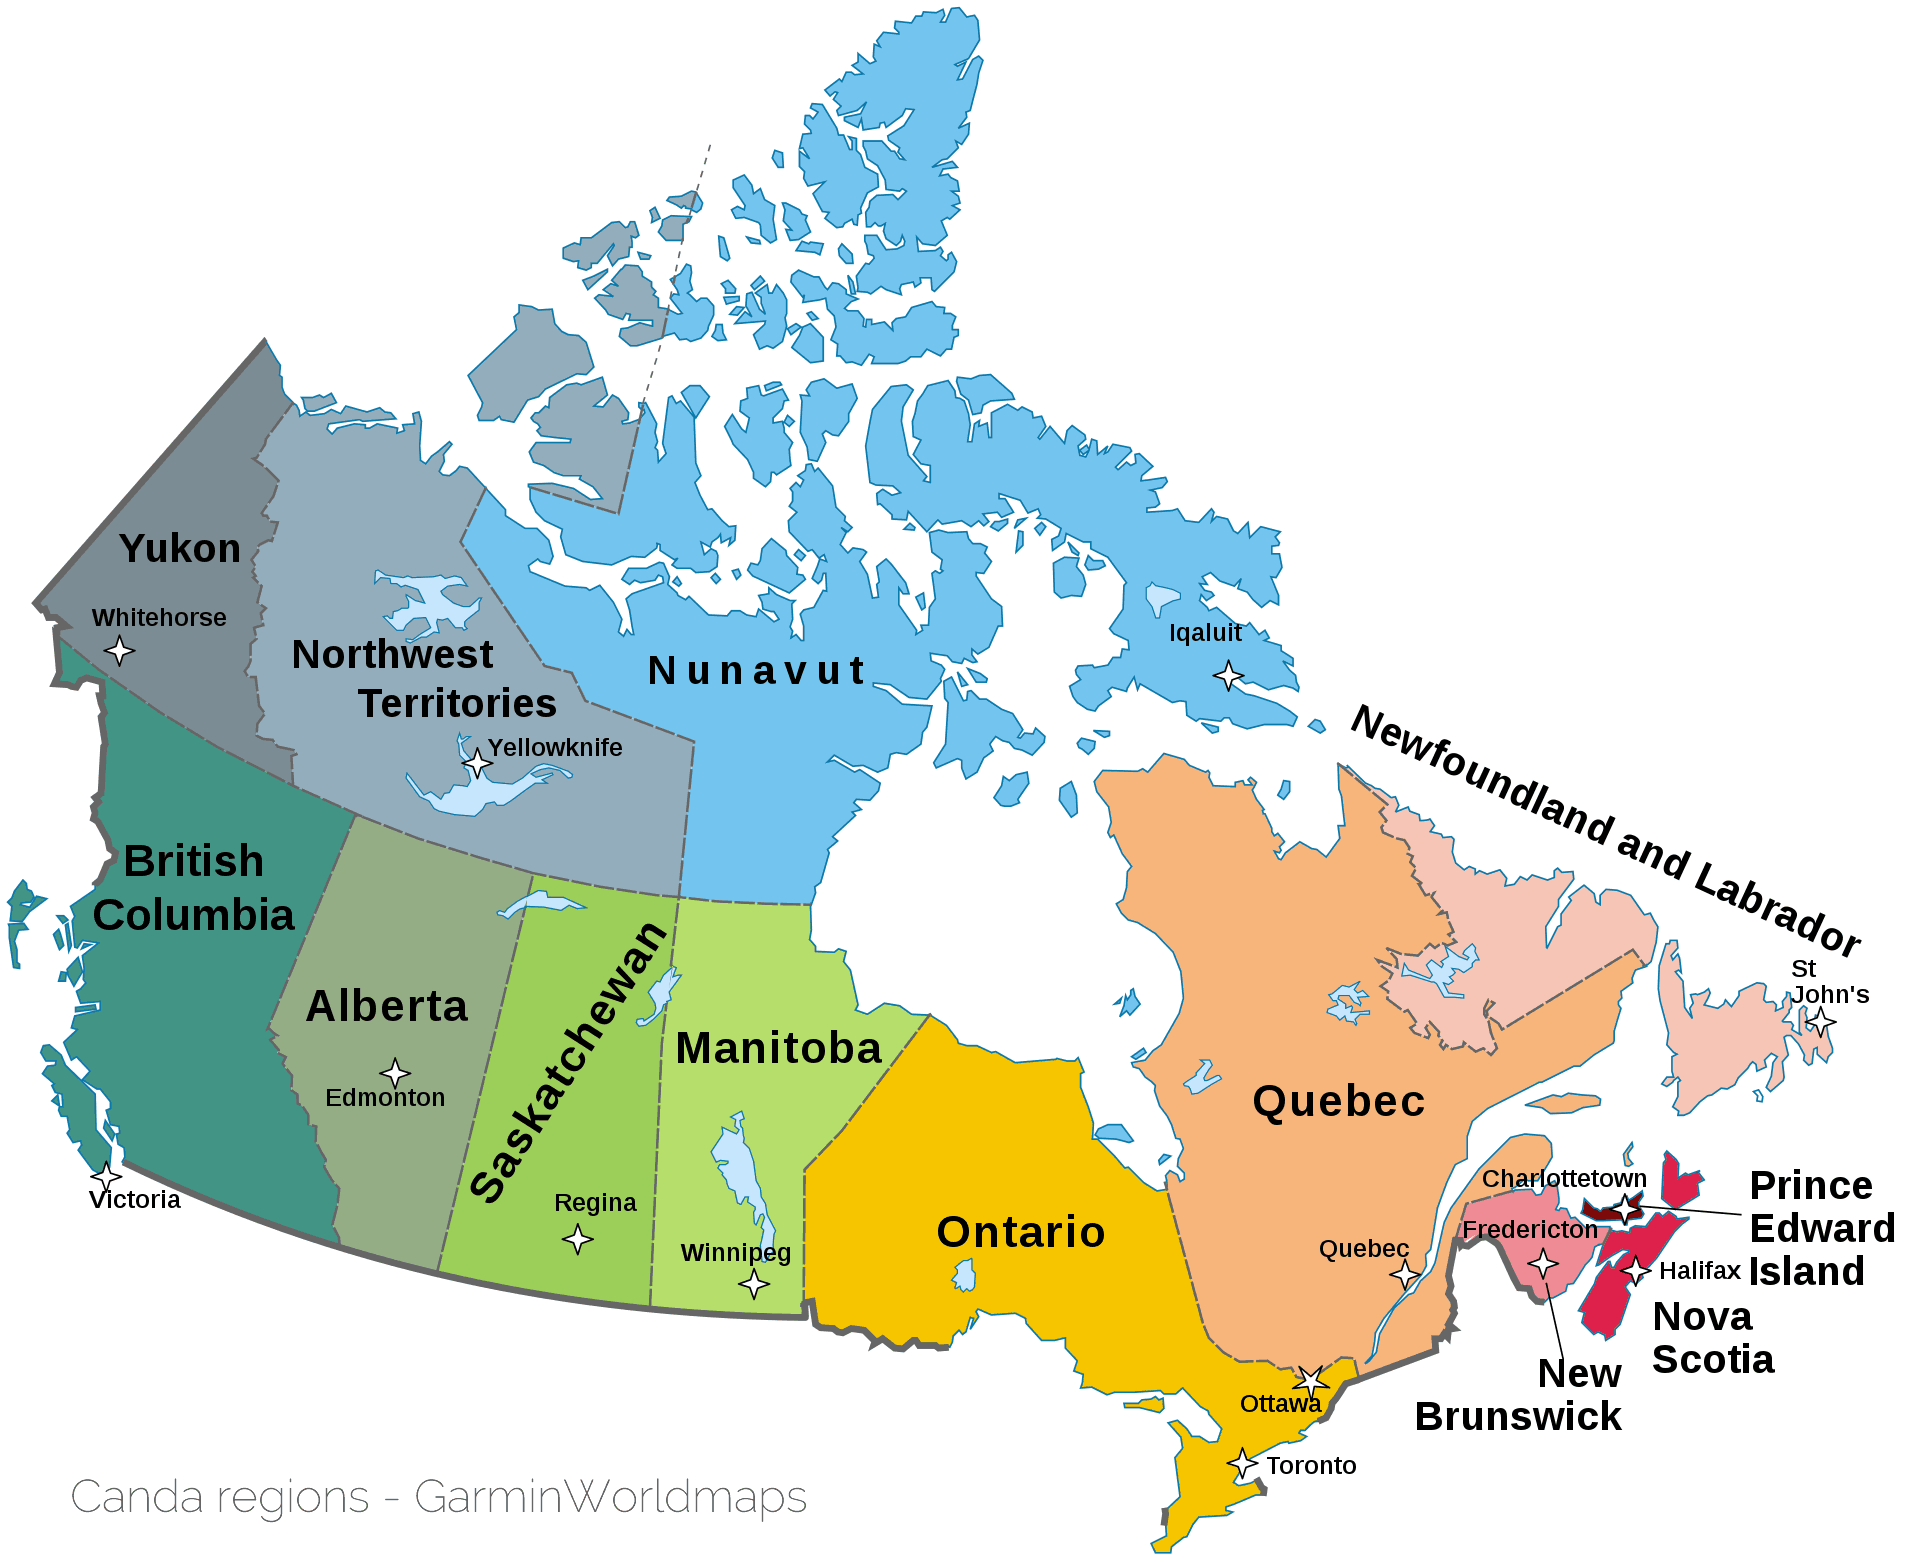 Canada regions Staate - Garmin Worldmaps